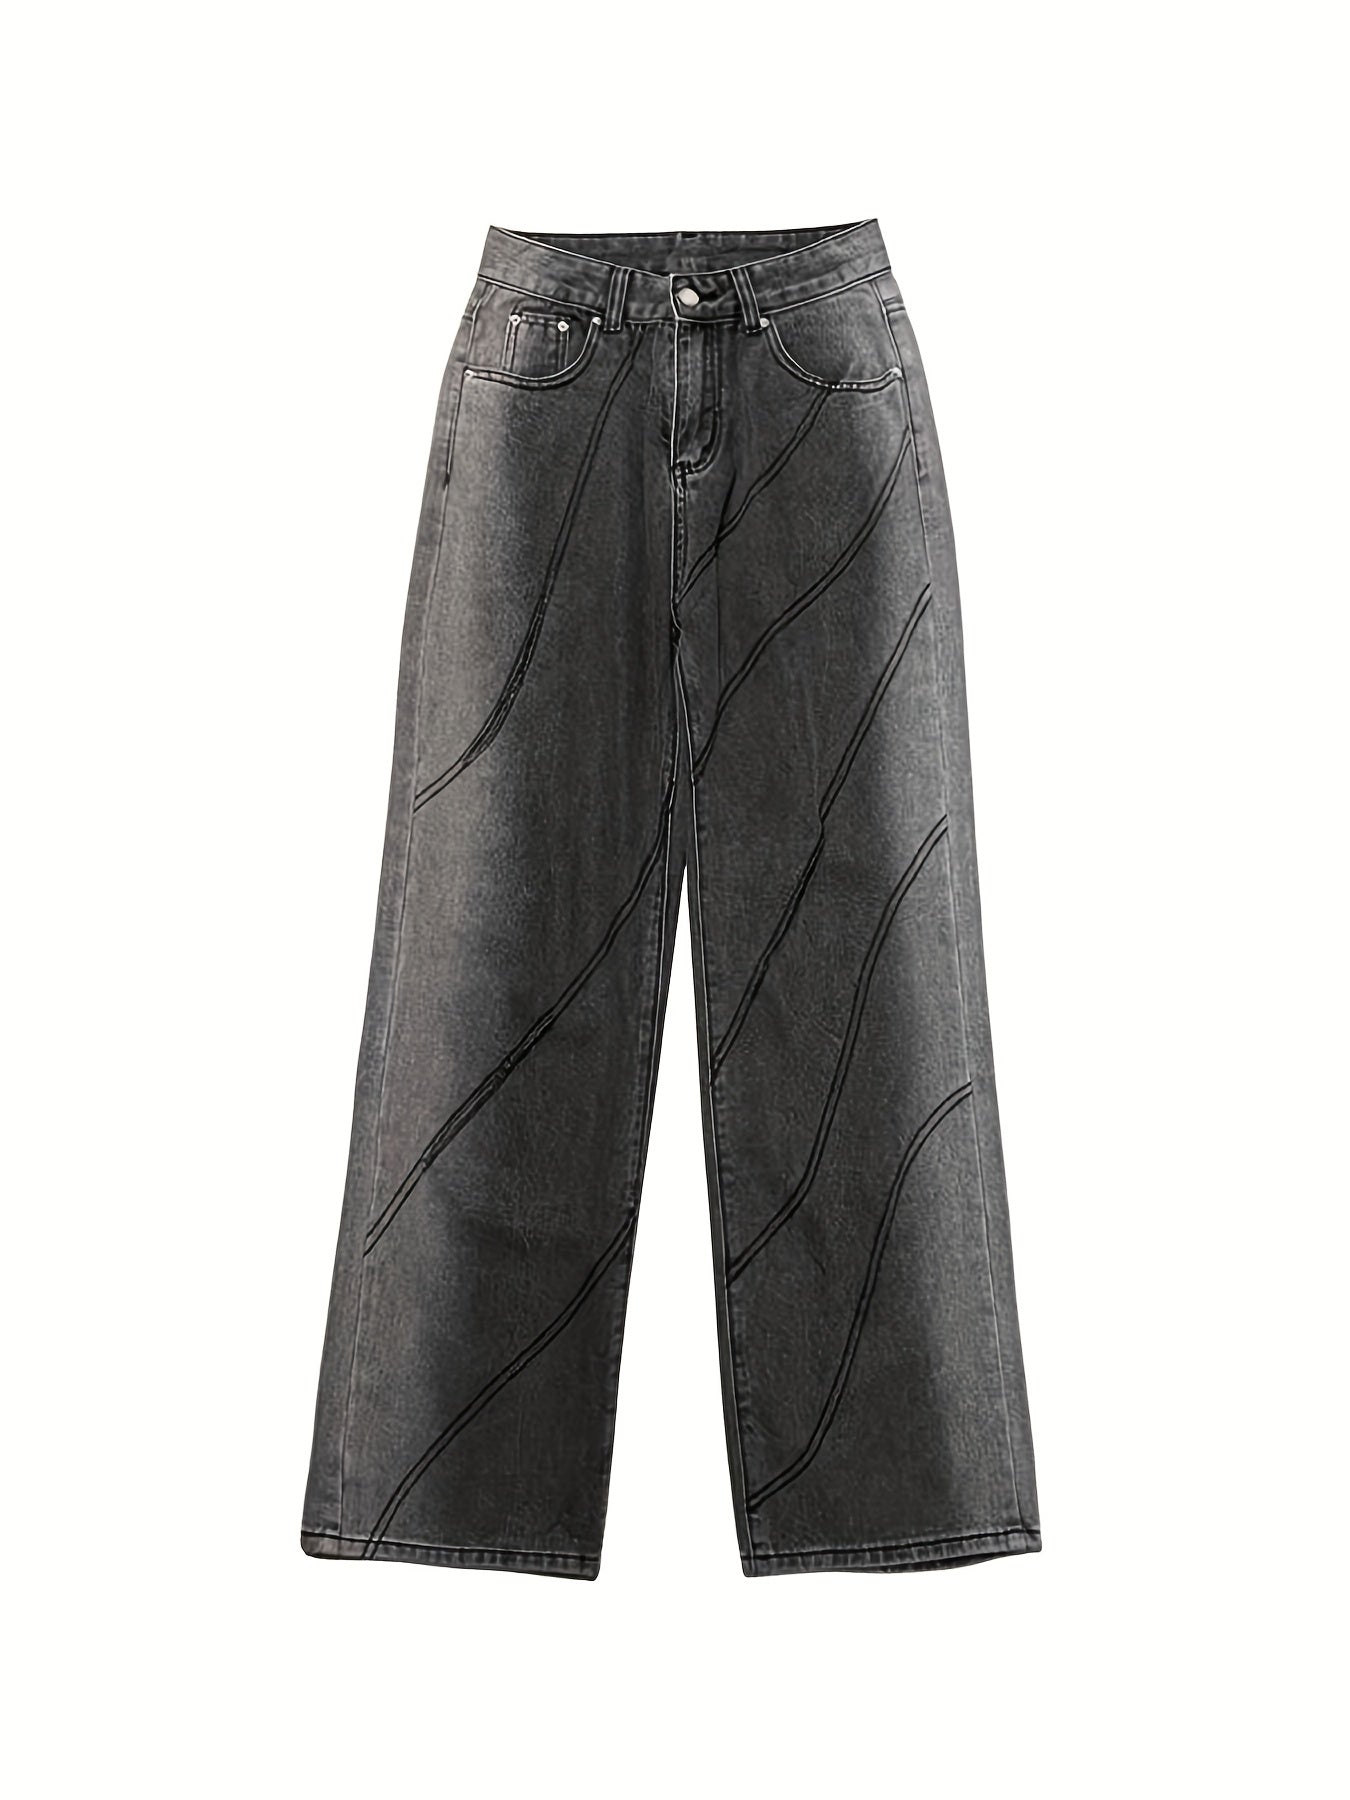 「lovevop」Cut Out Stitching Detail Wide Leg Jeans, Dark Grey Washed Zipper Button Closure Street Style Denim Pants, Women's Denim Jeans & Clothing